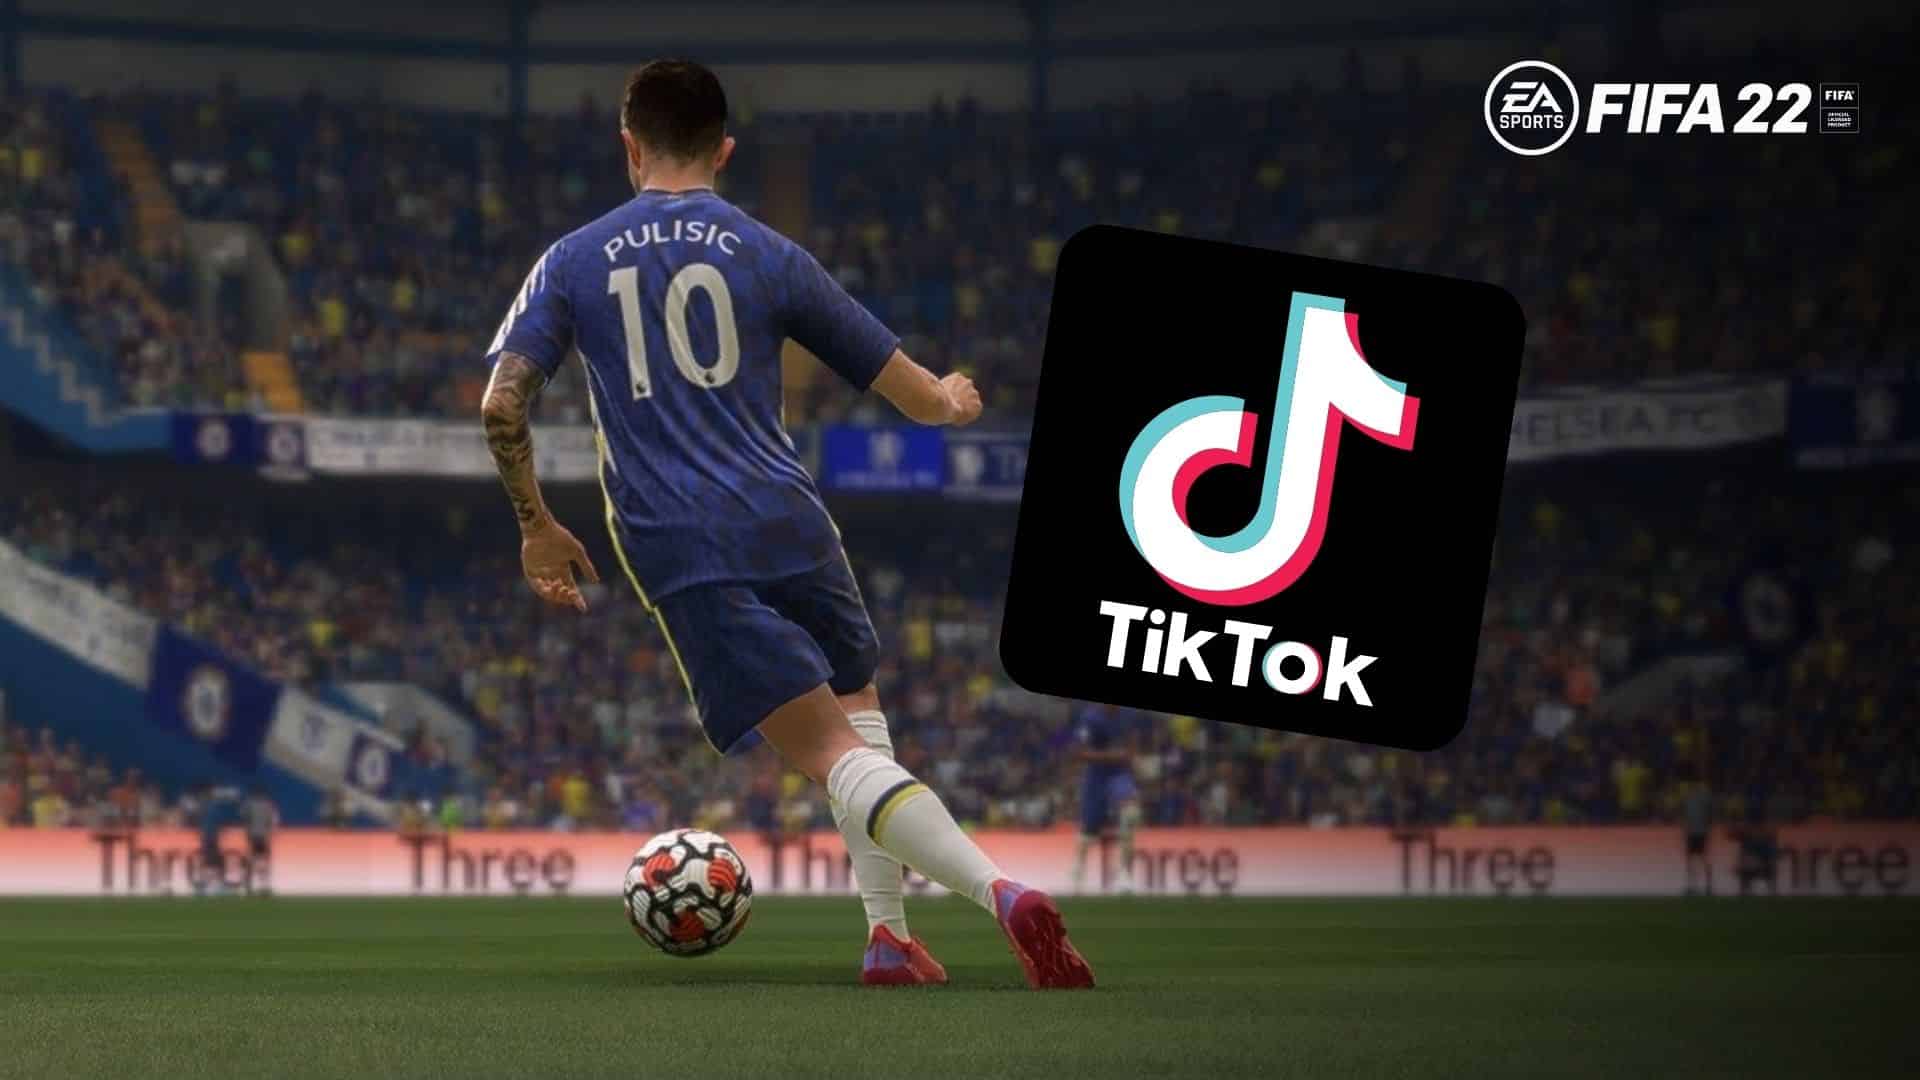 fifa 22 and tiktok logo